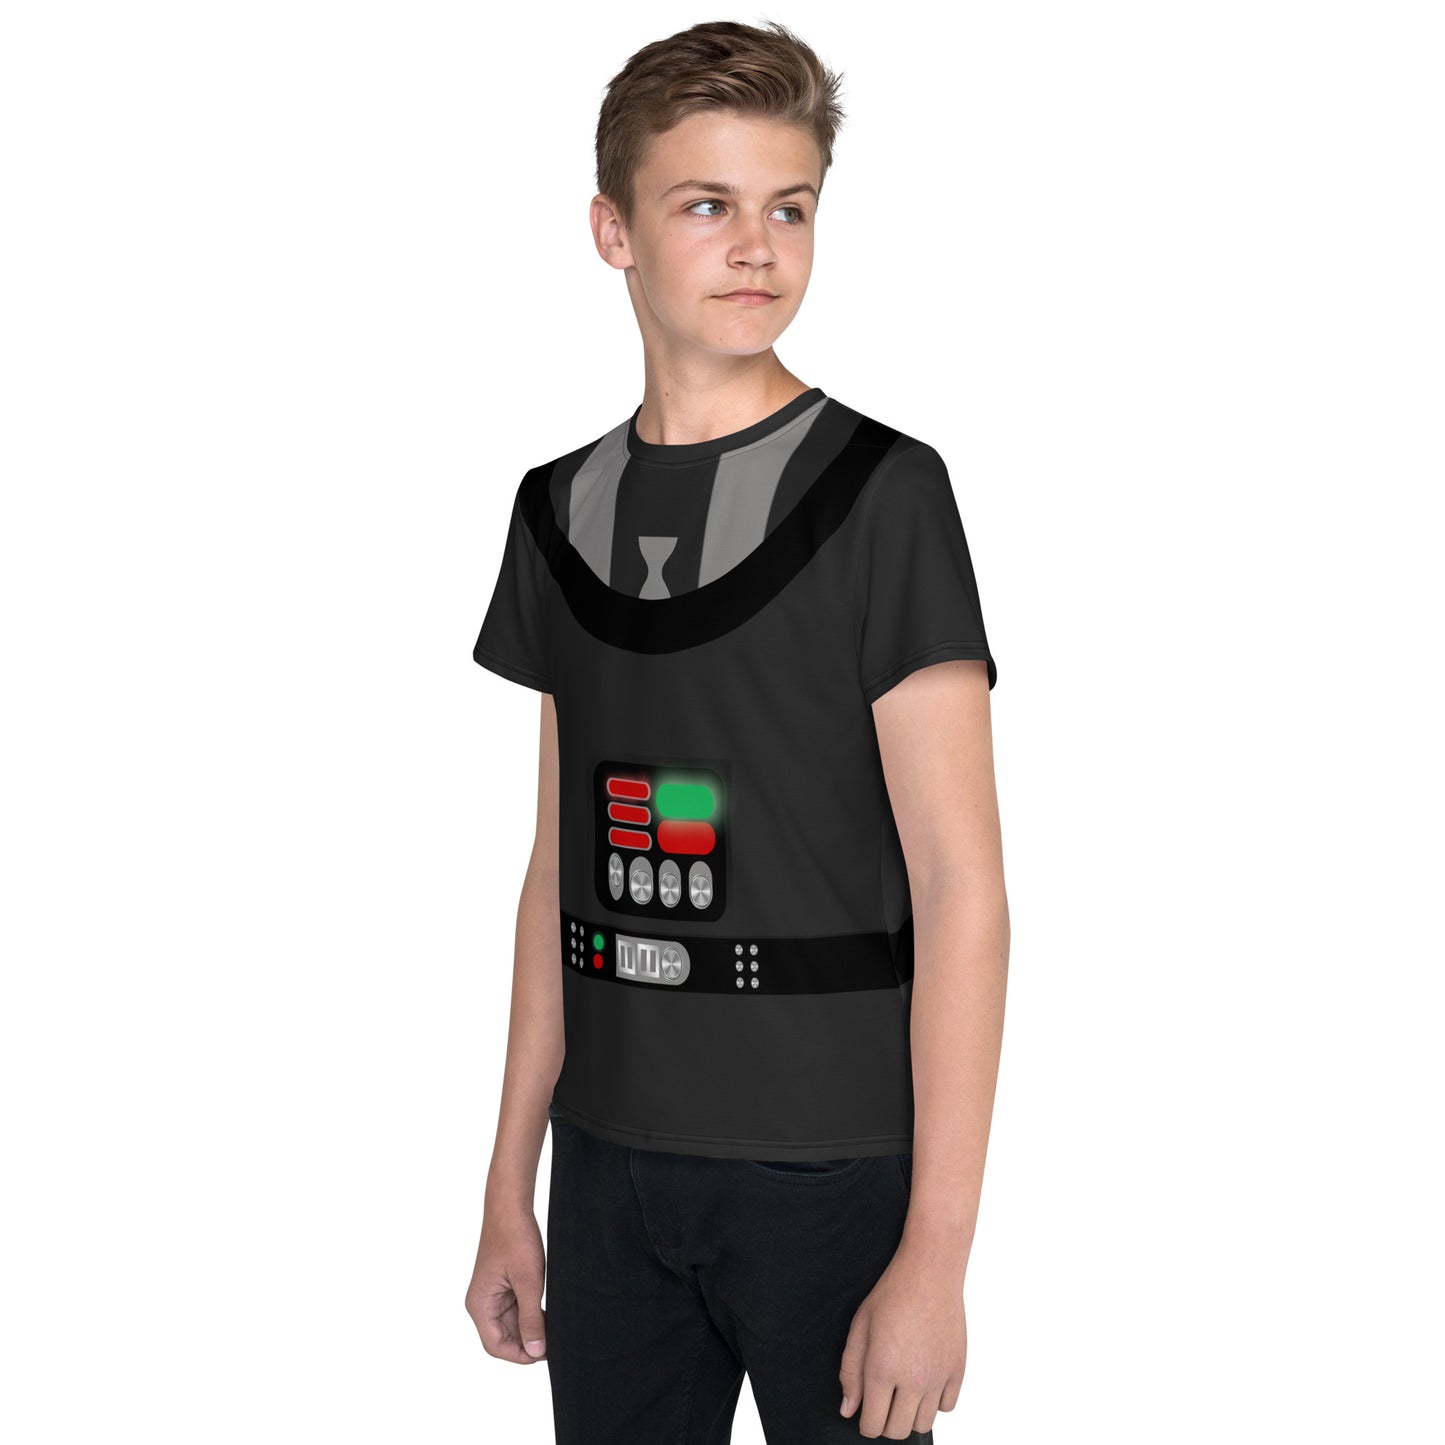 Dark Side Youth crew neck t-shirt active wearcostumedarth vader#tag4##tag5##tag6#